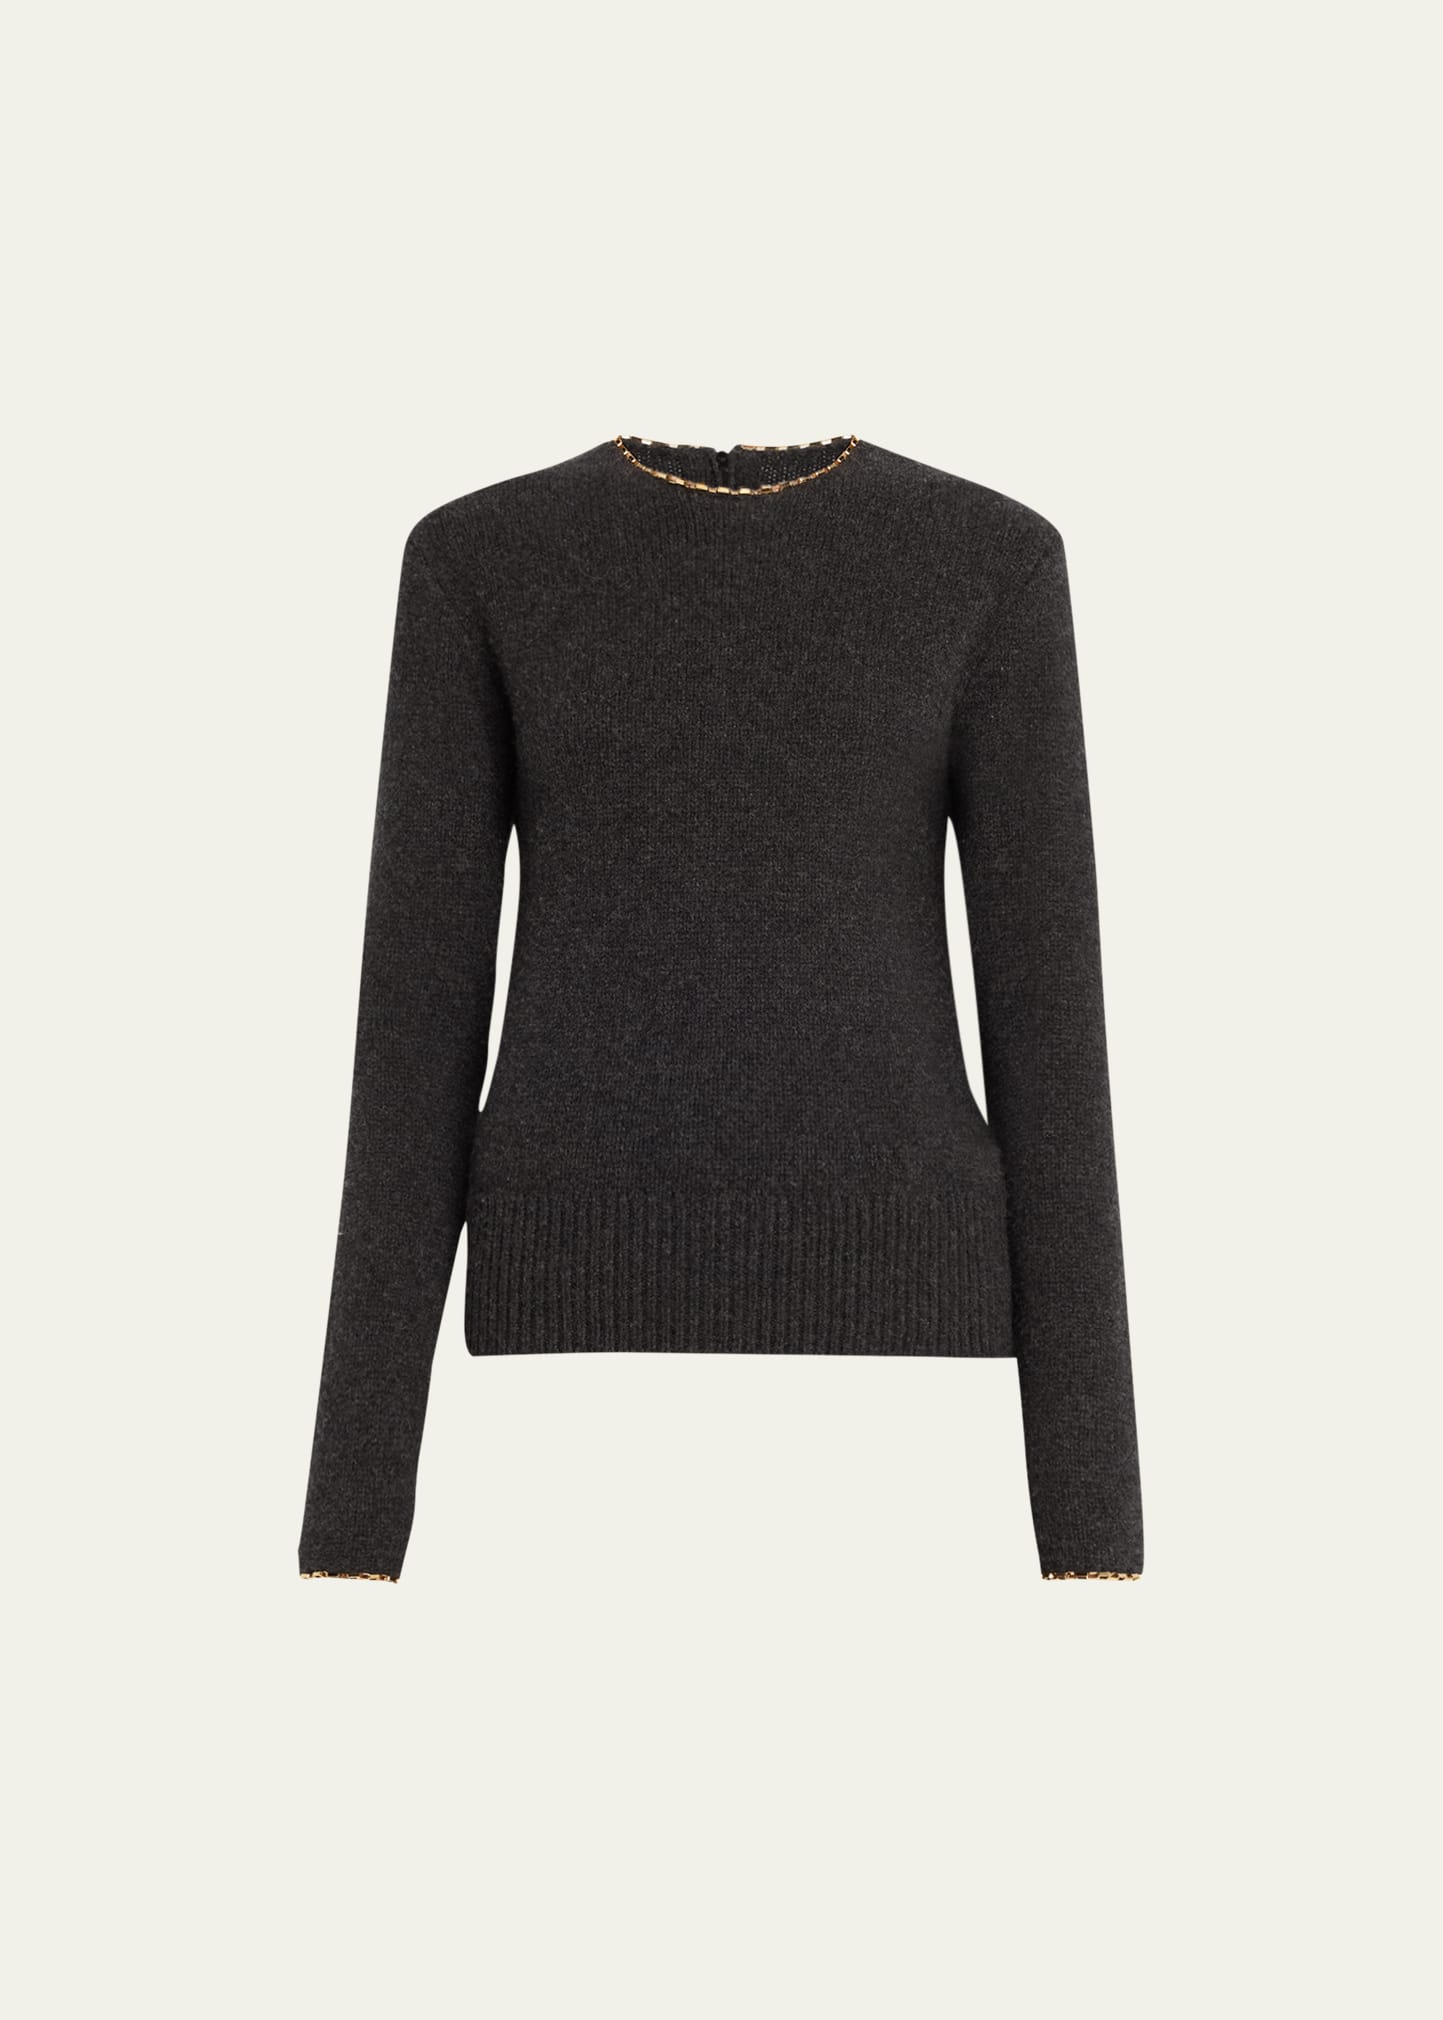 Totême Black Crewneck Sweater In Charcoal